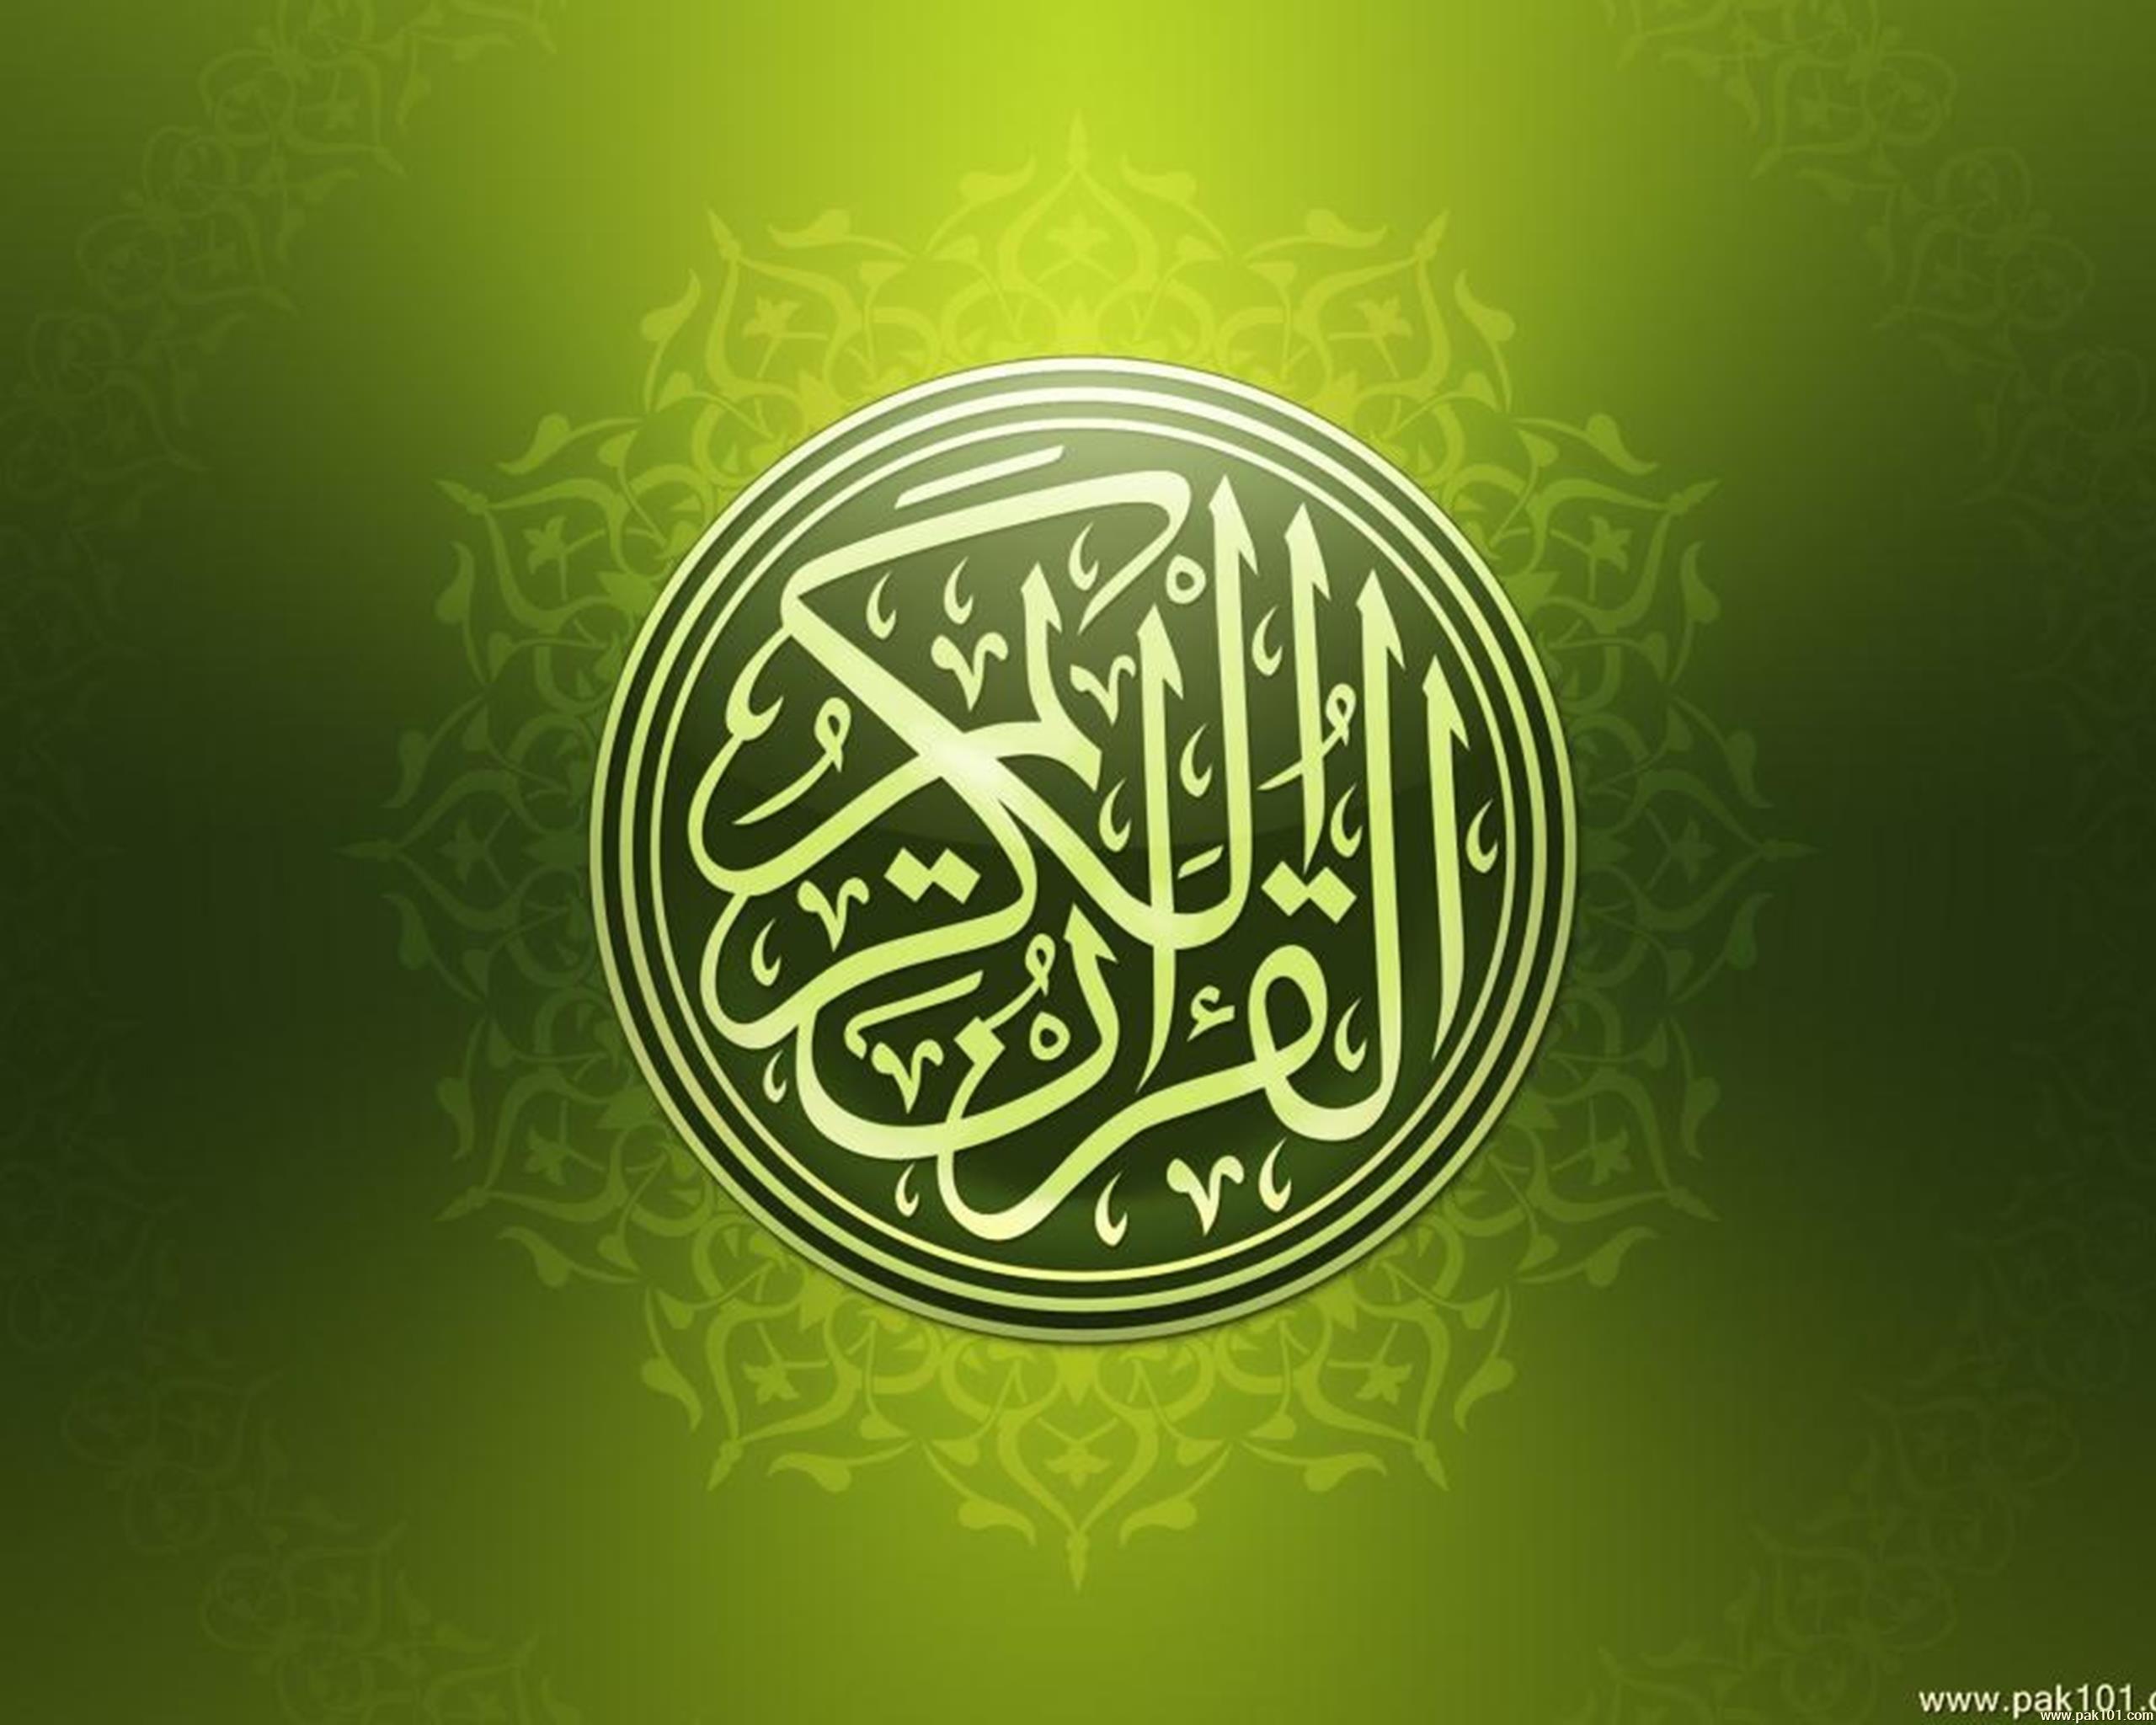 Wallpaper > Islamic > Al Quran Karim high quality! Free download